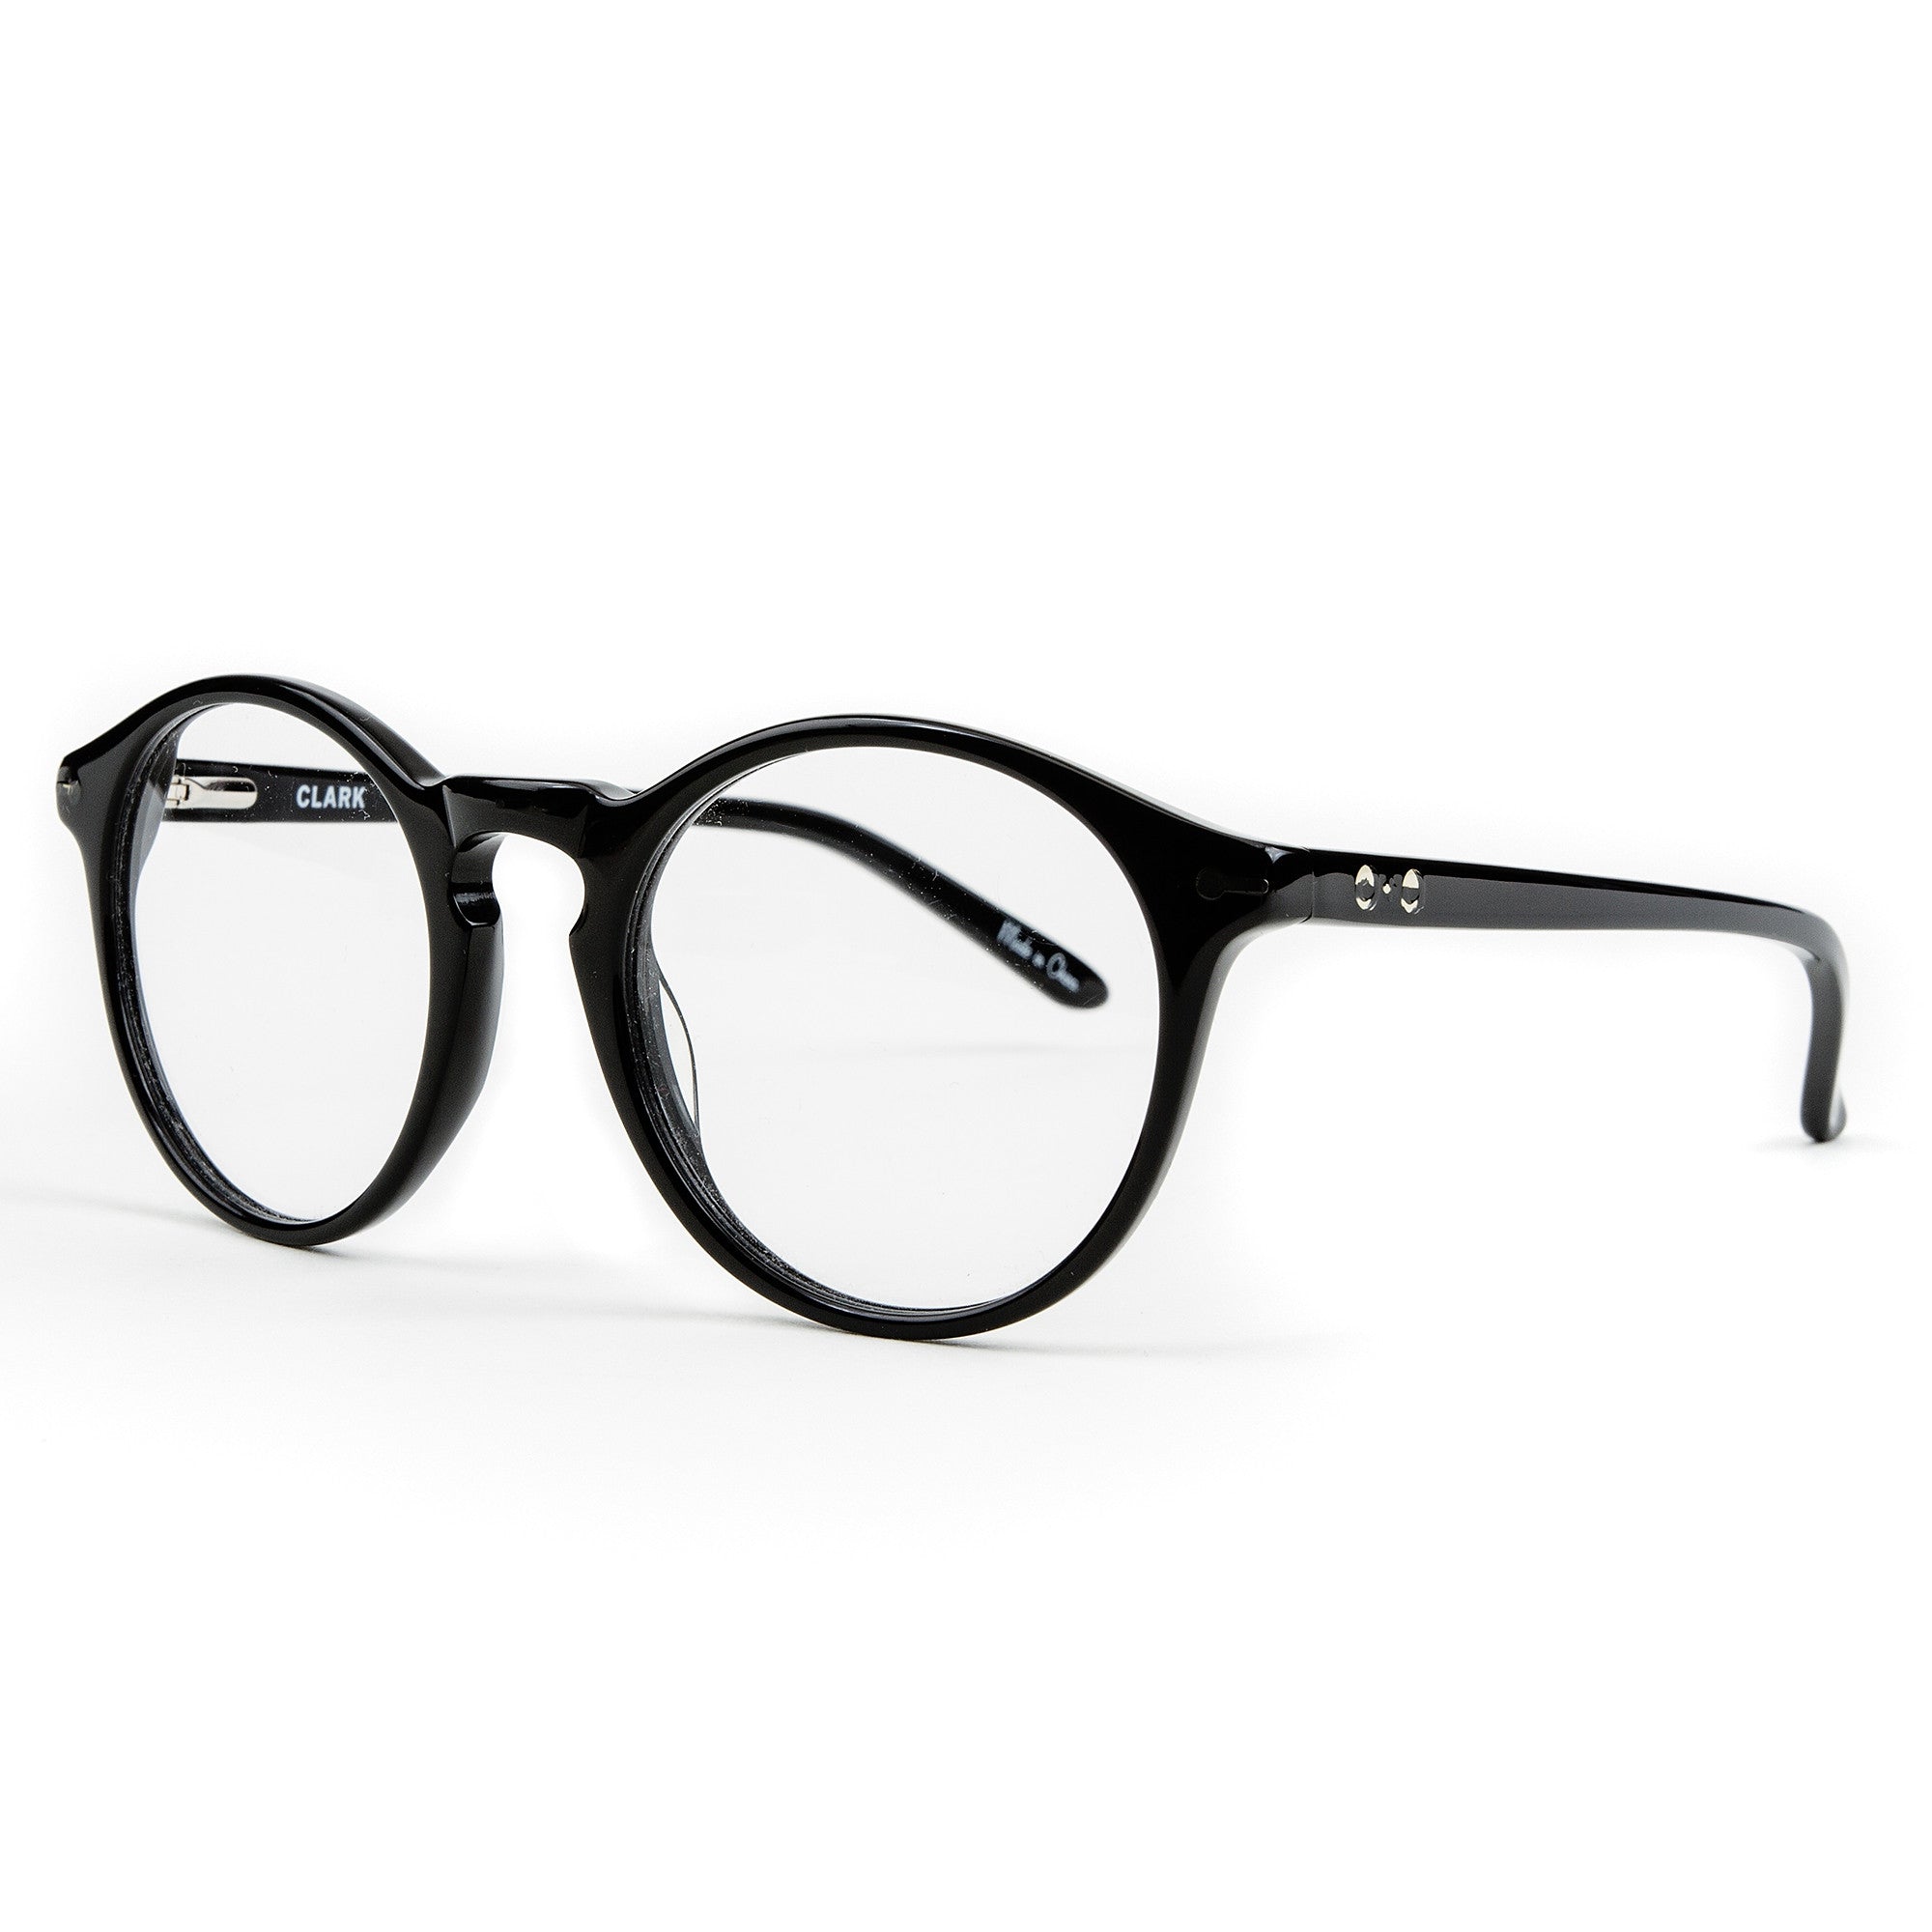 Clark' Black Optical Glasses